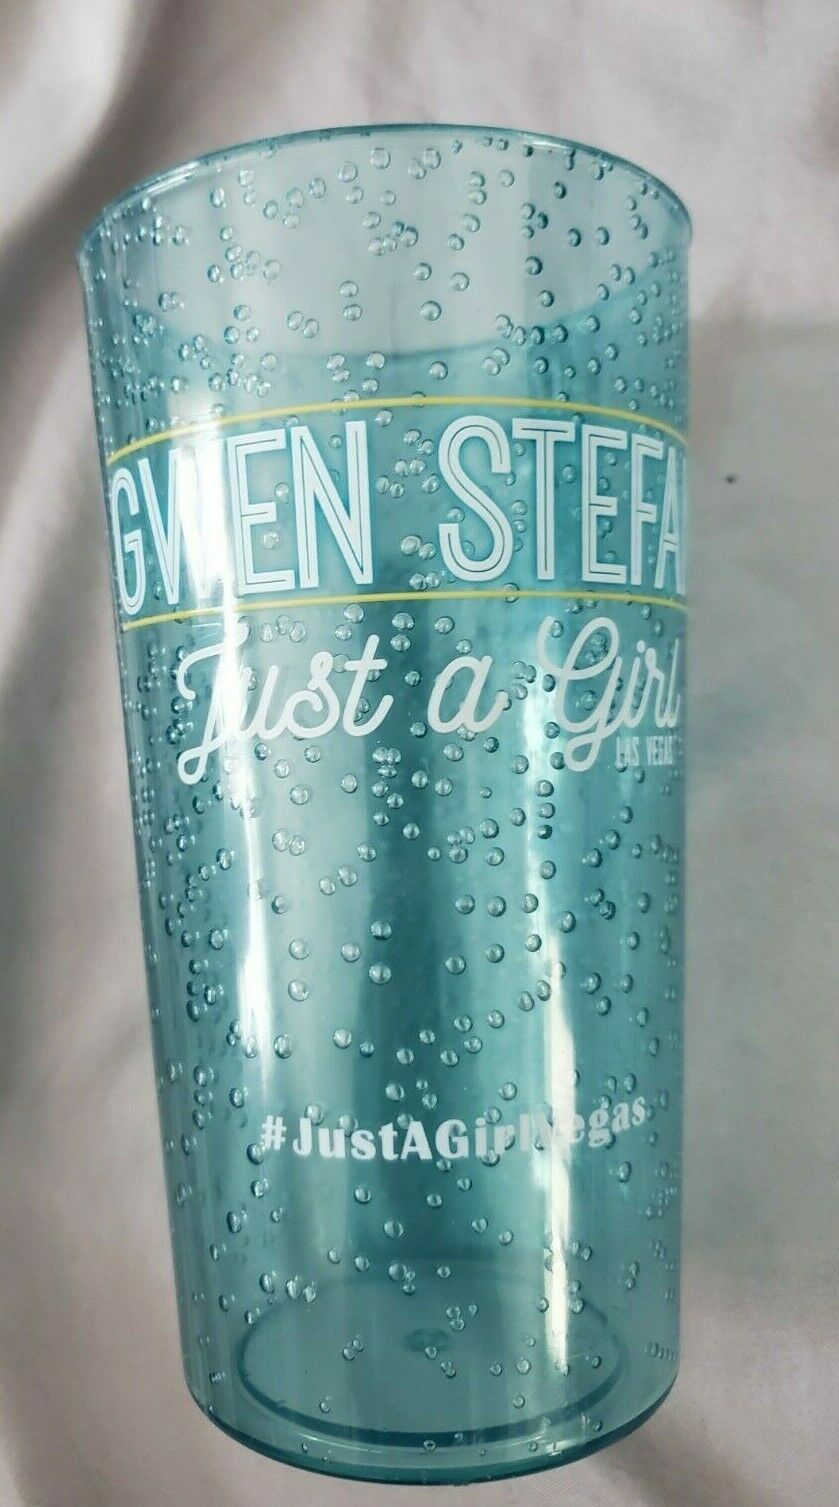 Gwen Stefani #justagirlvegas Show Plastic Cup